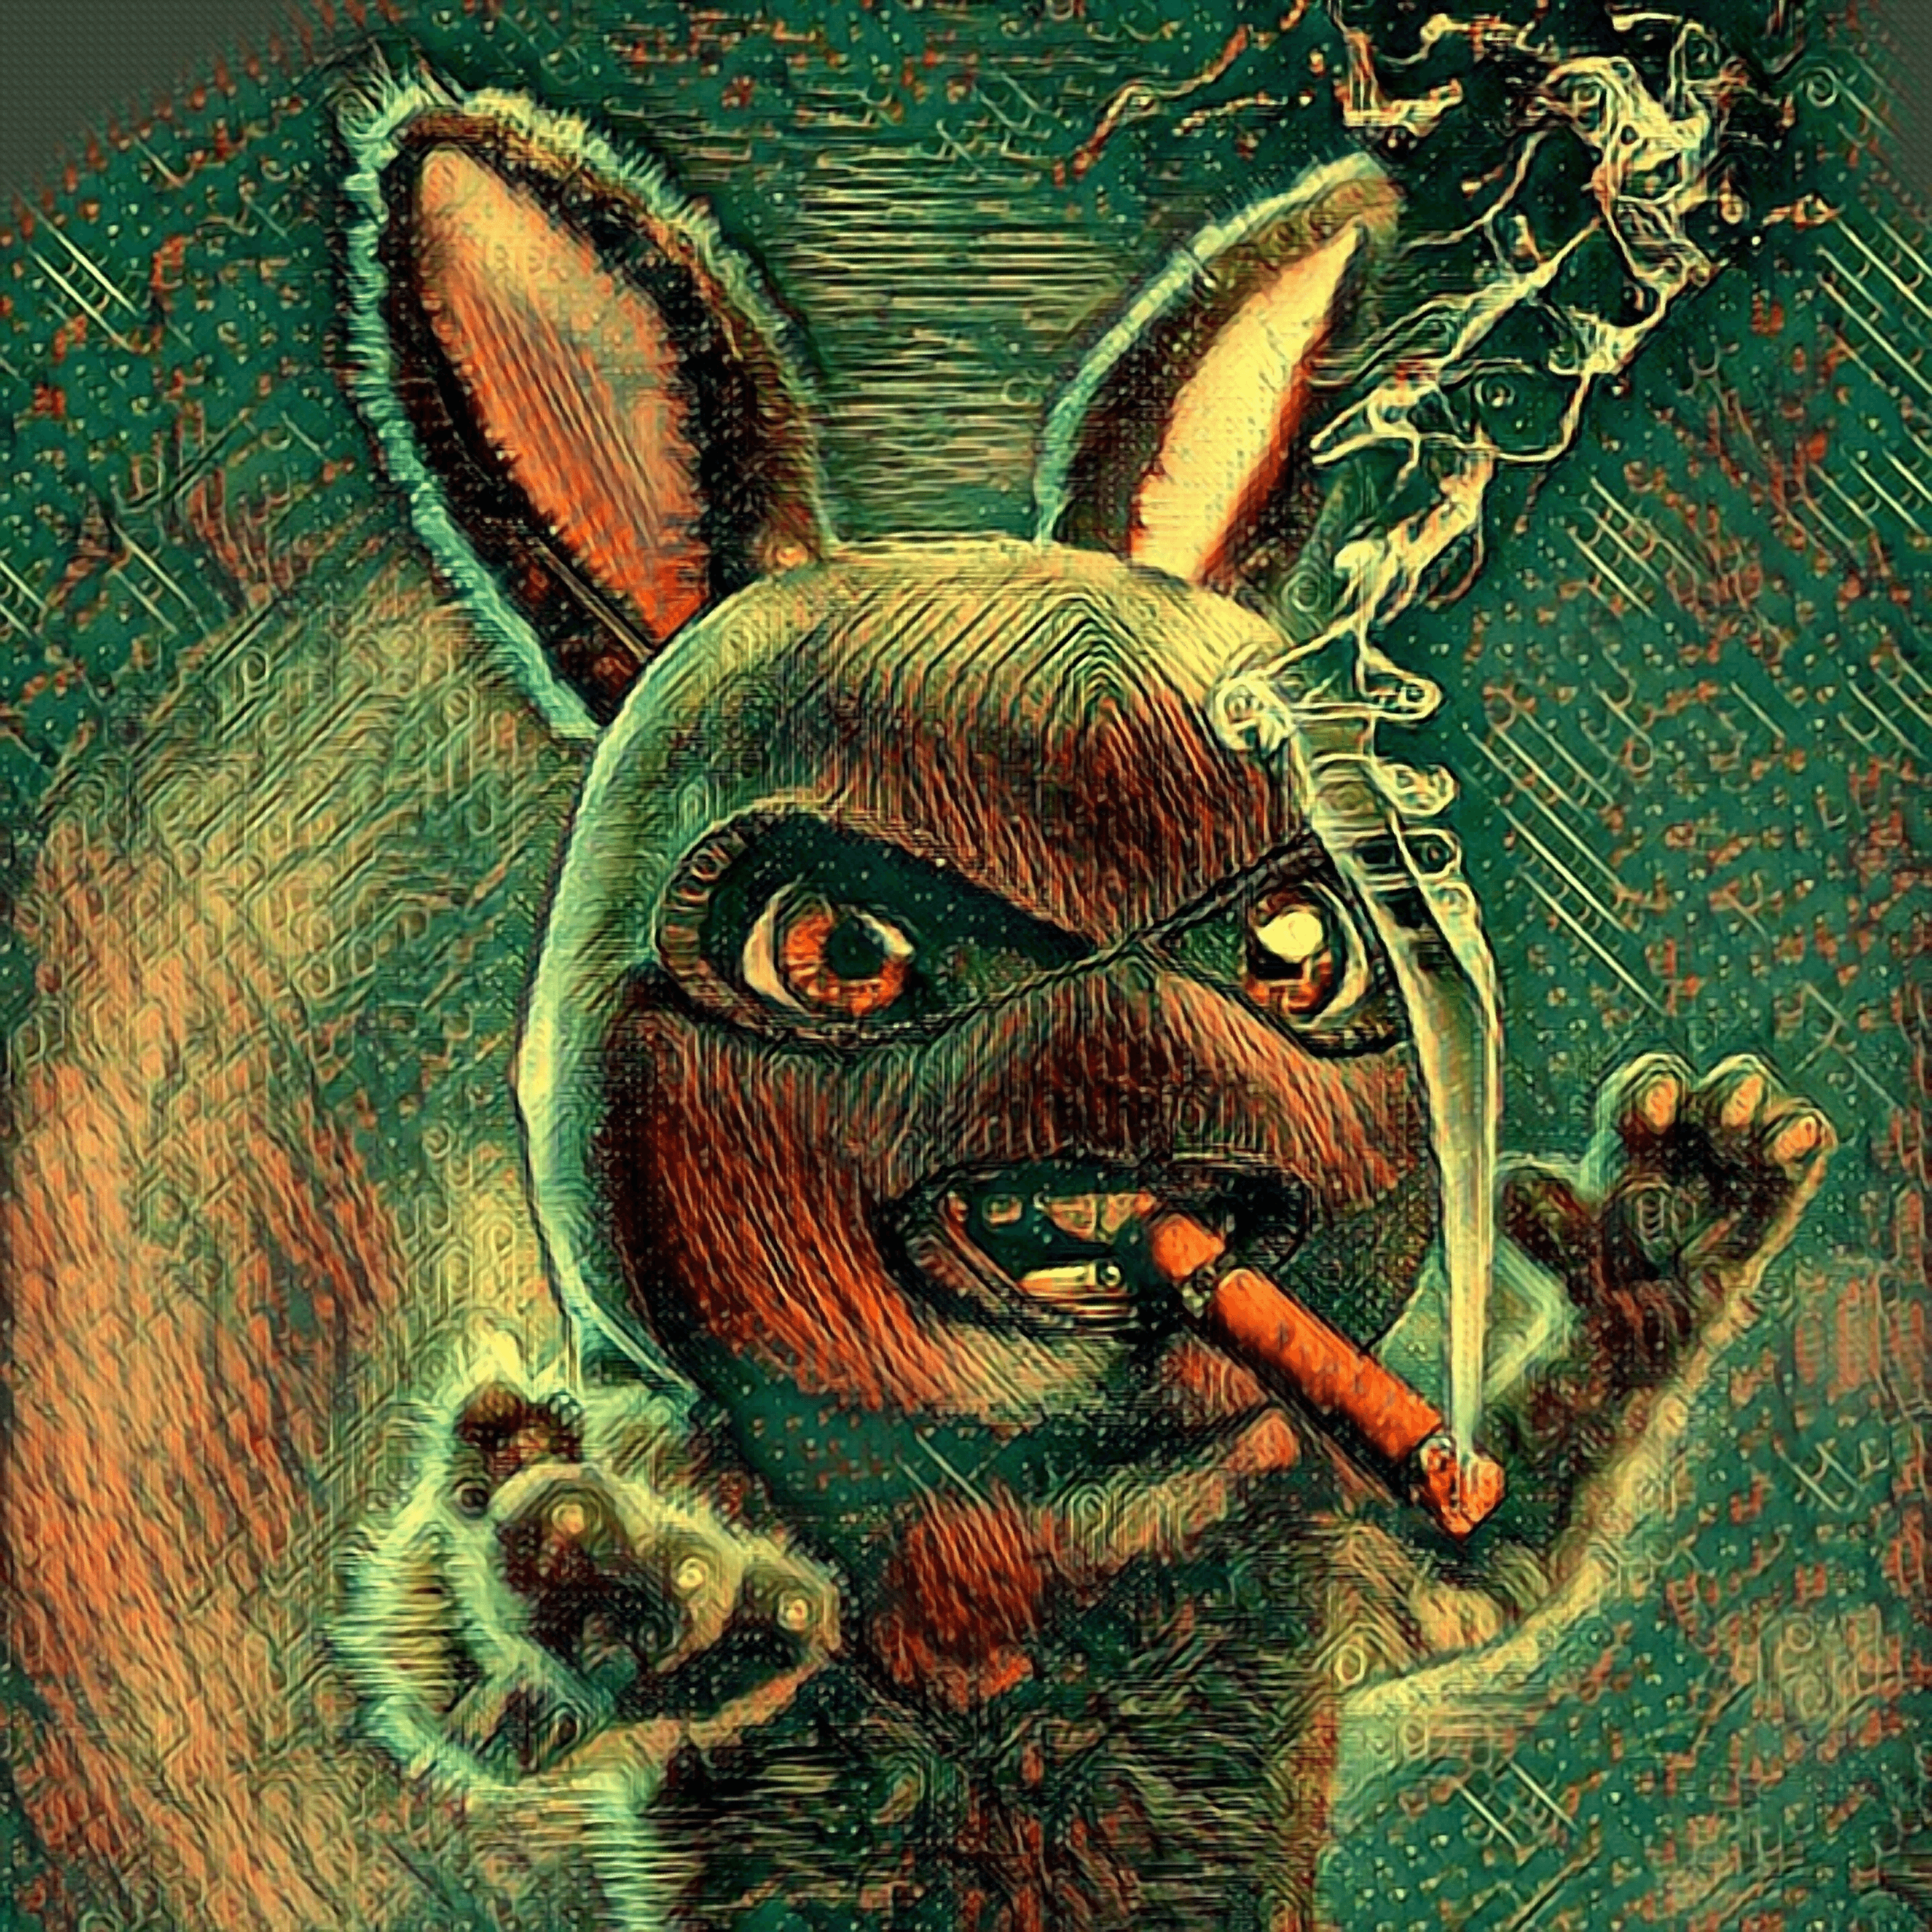 The Smoking Rabbit #2 Art NFT